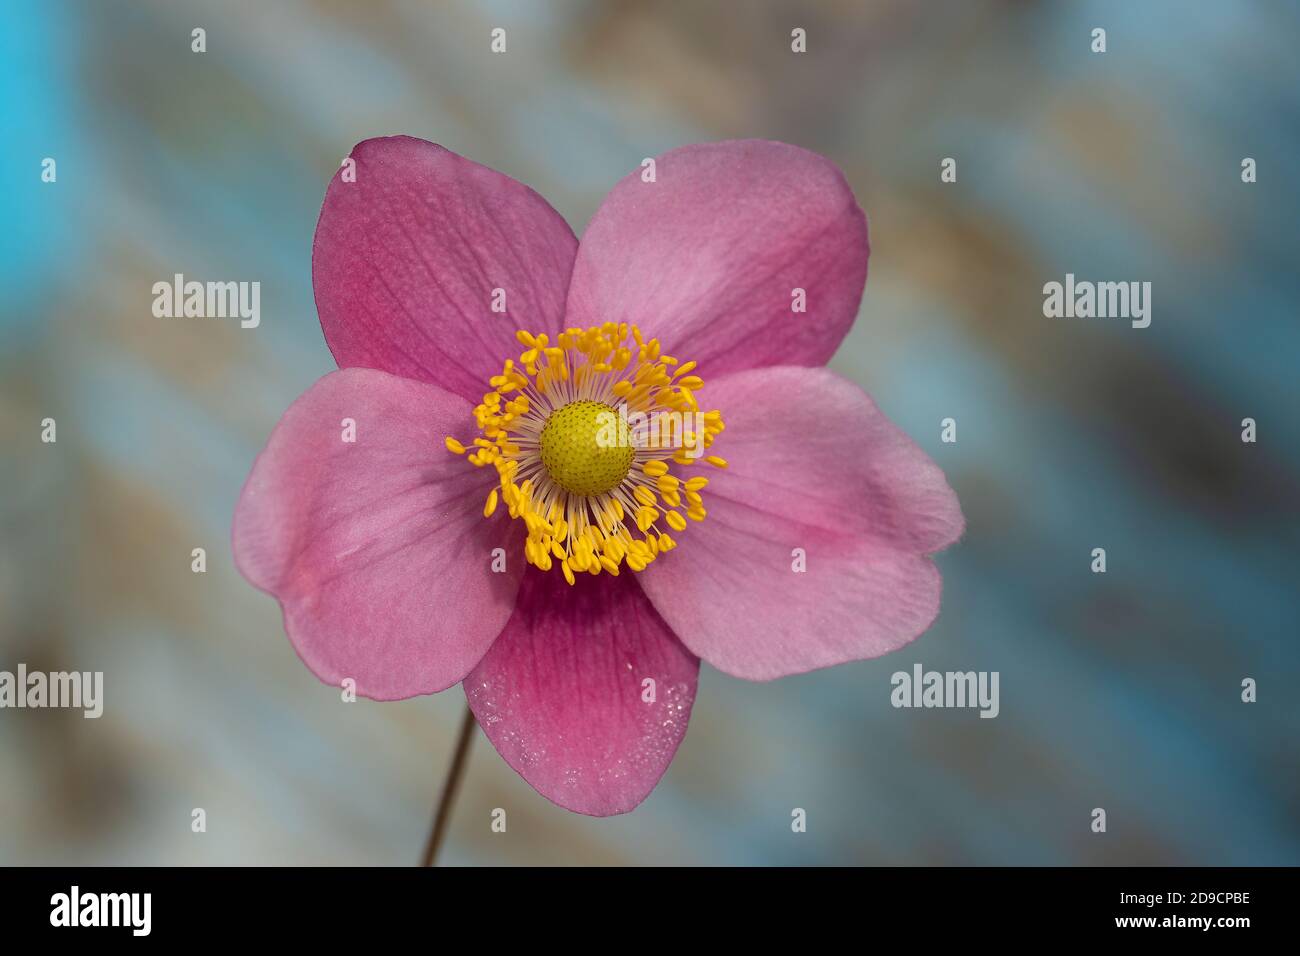 Macro Shot of Anemone Vivid Dark Pink Flower On Blue Blurred Decayed Wooden Background Stock Photo